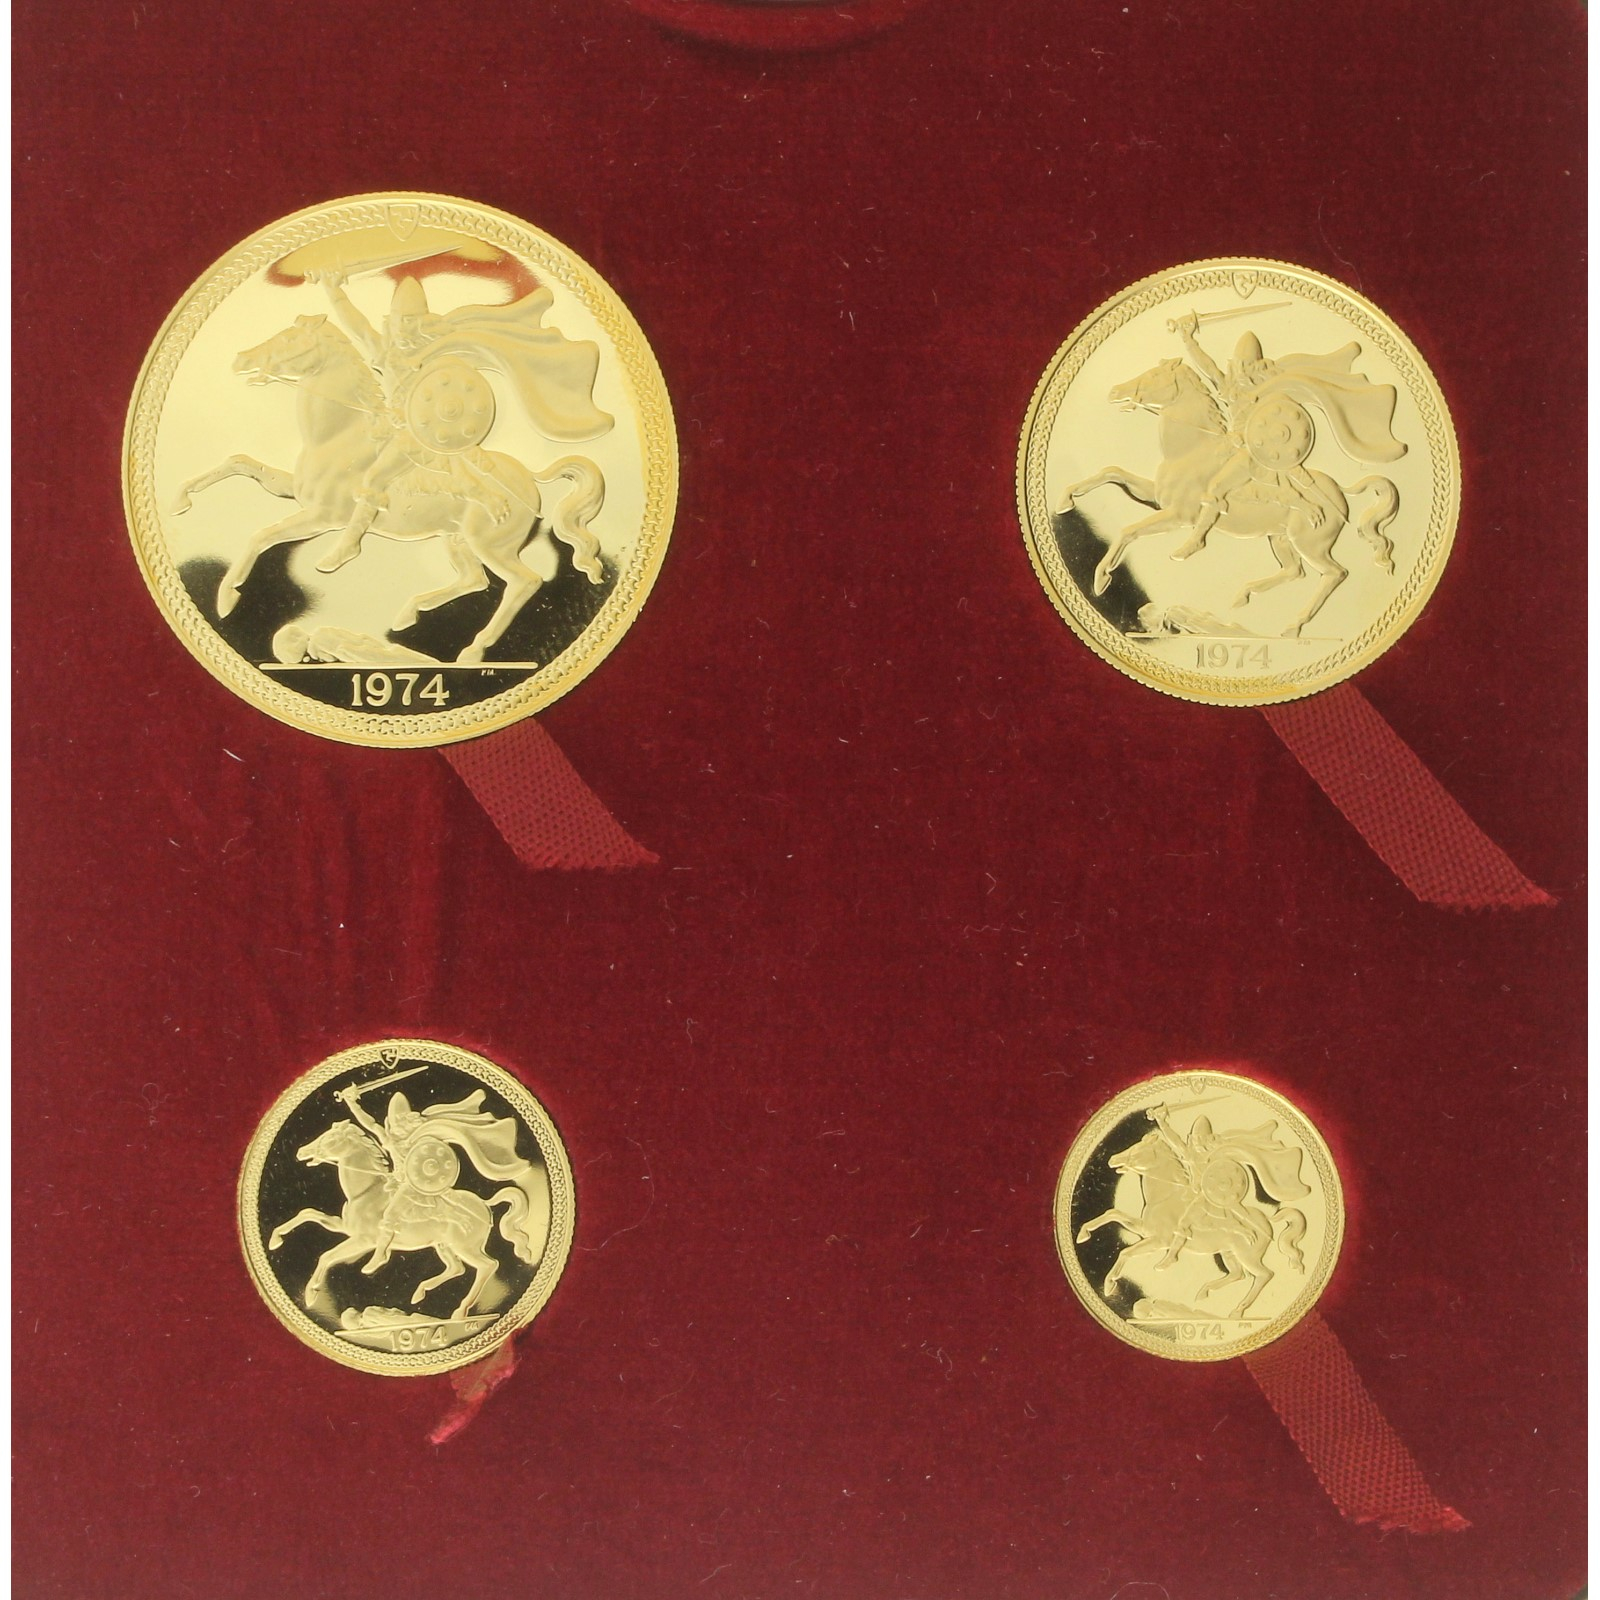 Isle of Man - 1974 - Gold Proof Set - 4 coins - Elizabeth II